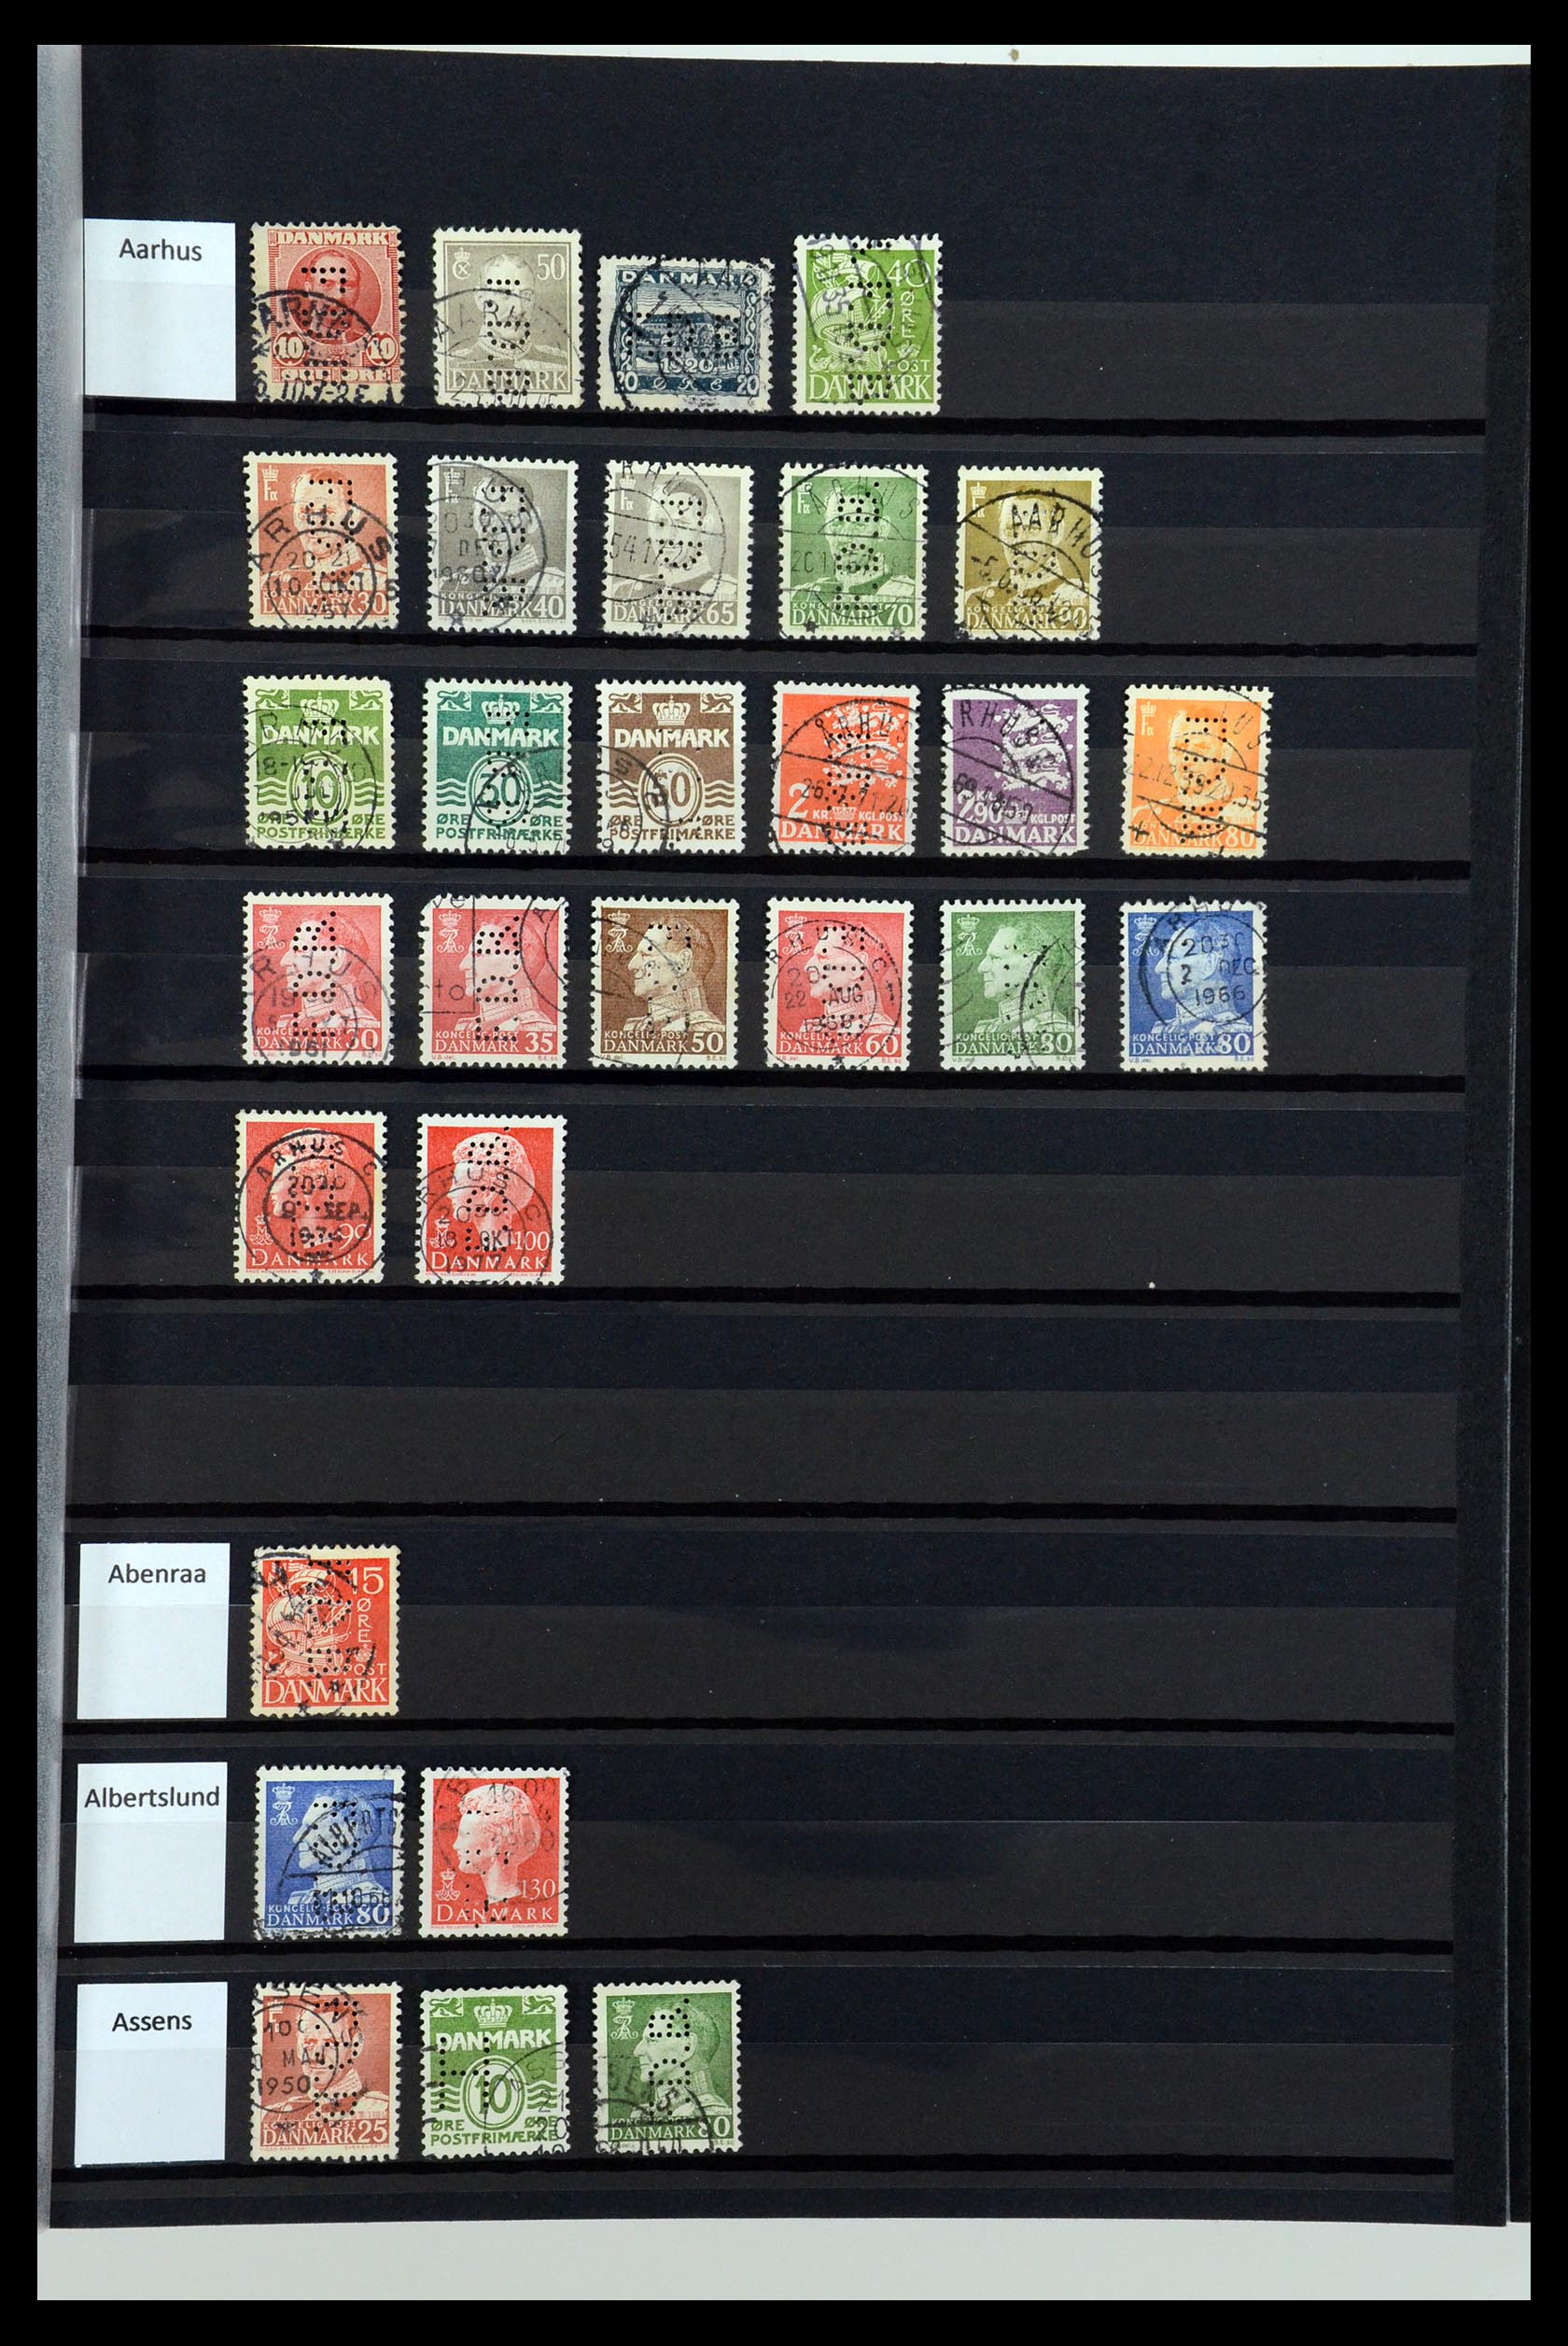 36396 067 - Stamp collection 36396 Denmark perfins.